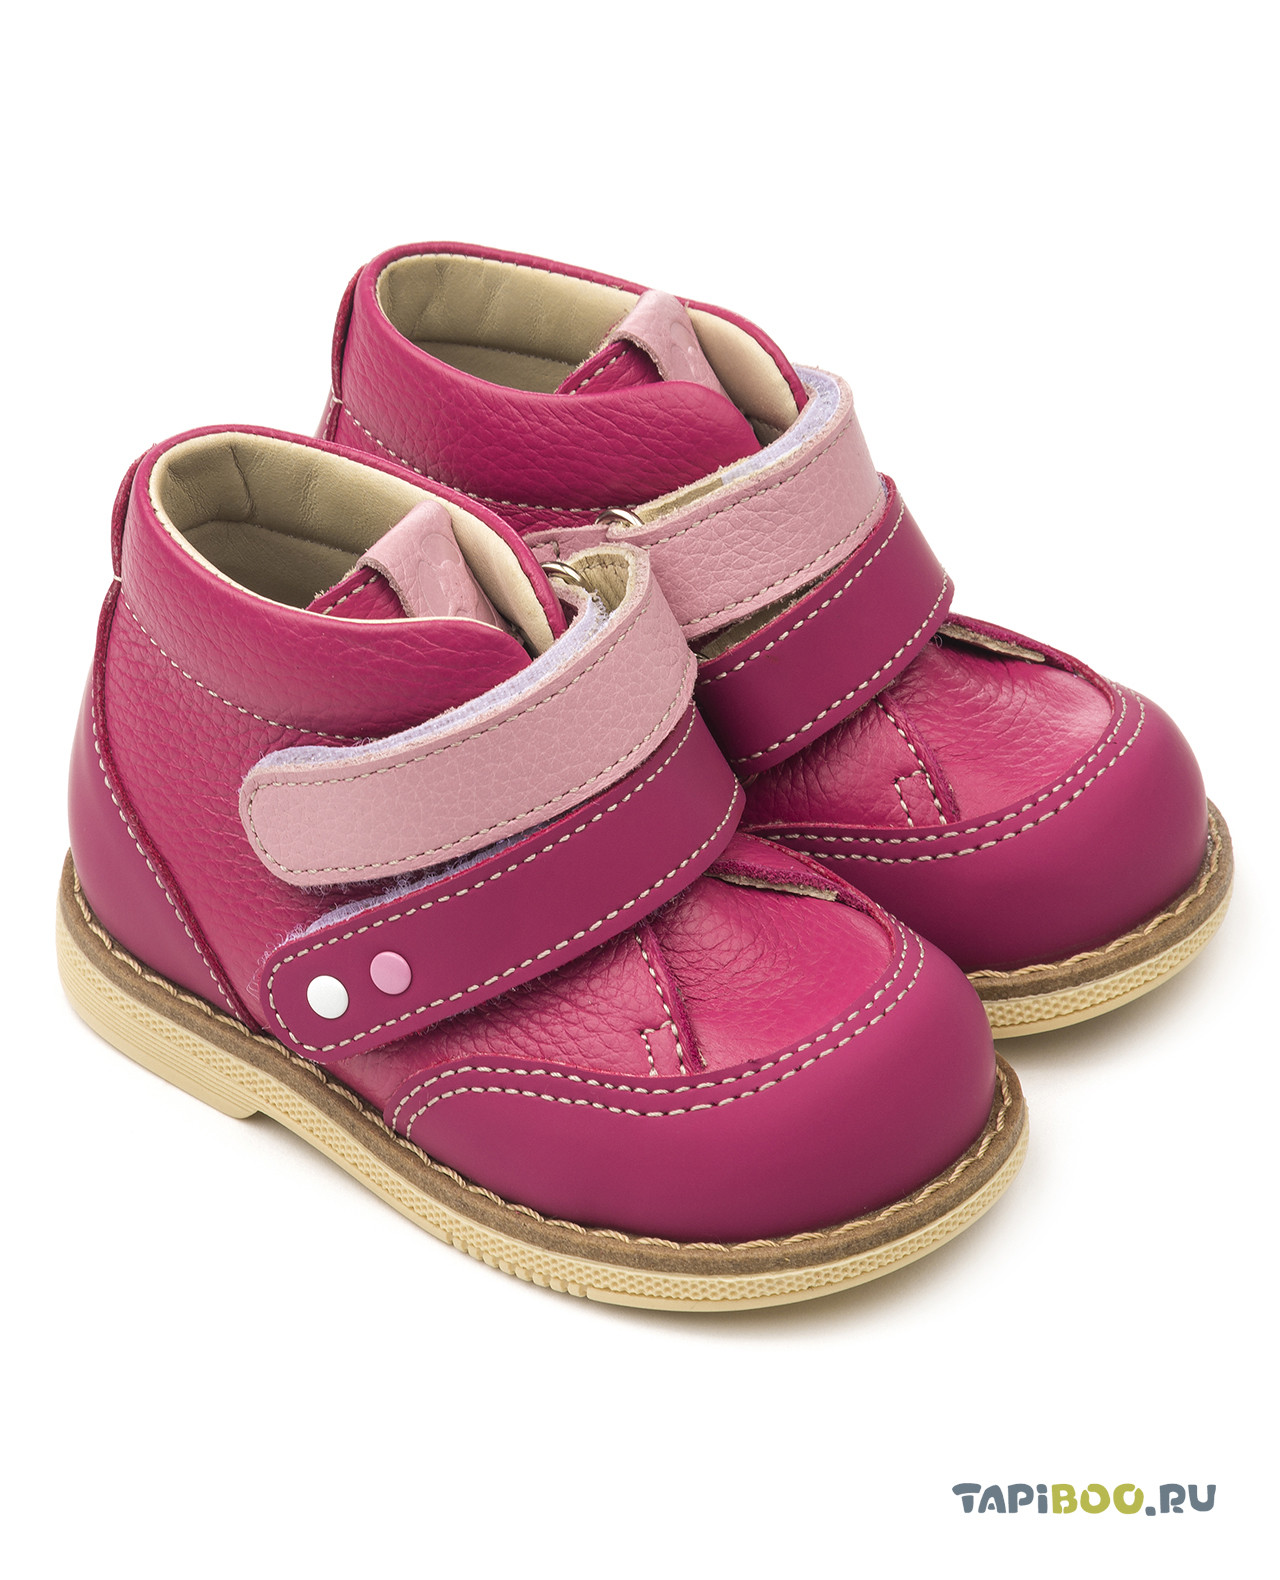 Ботинки детские Tapiboo ФУКСИЯ (73058, 25) ботинки детские 24015 фуксия малиновая радуга 2021 р18